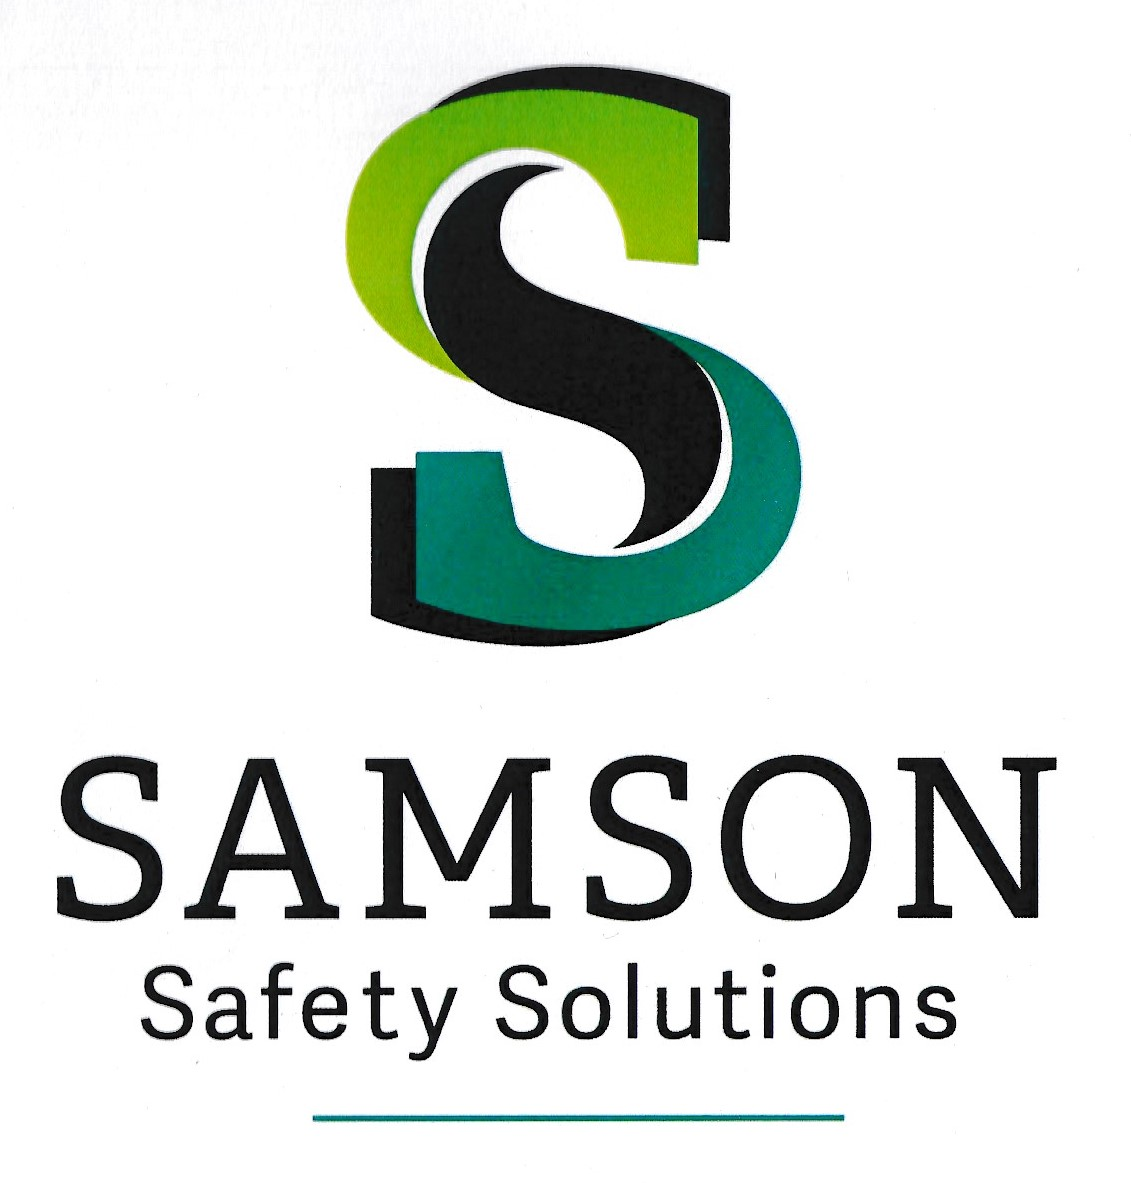 Samson Safety Solutions logo